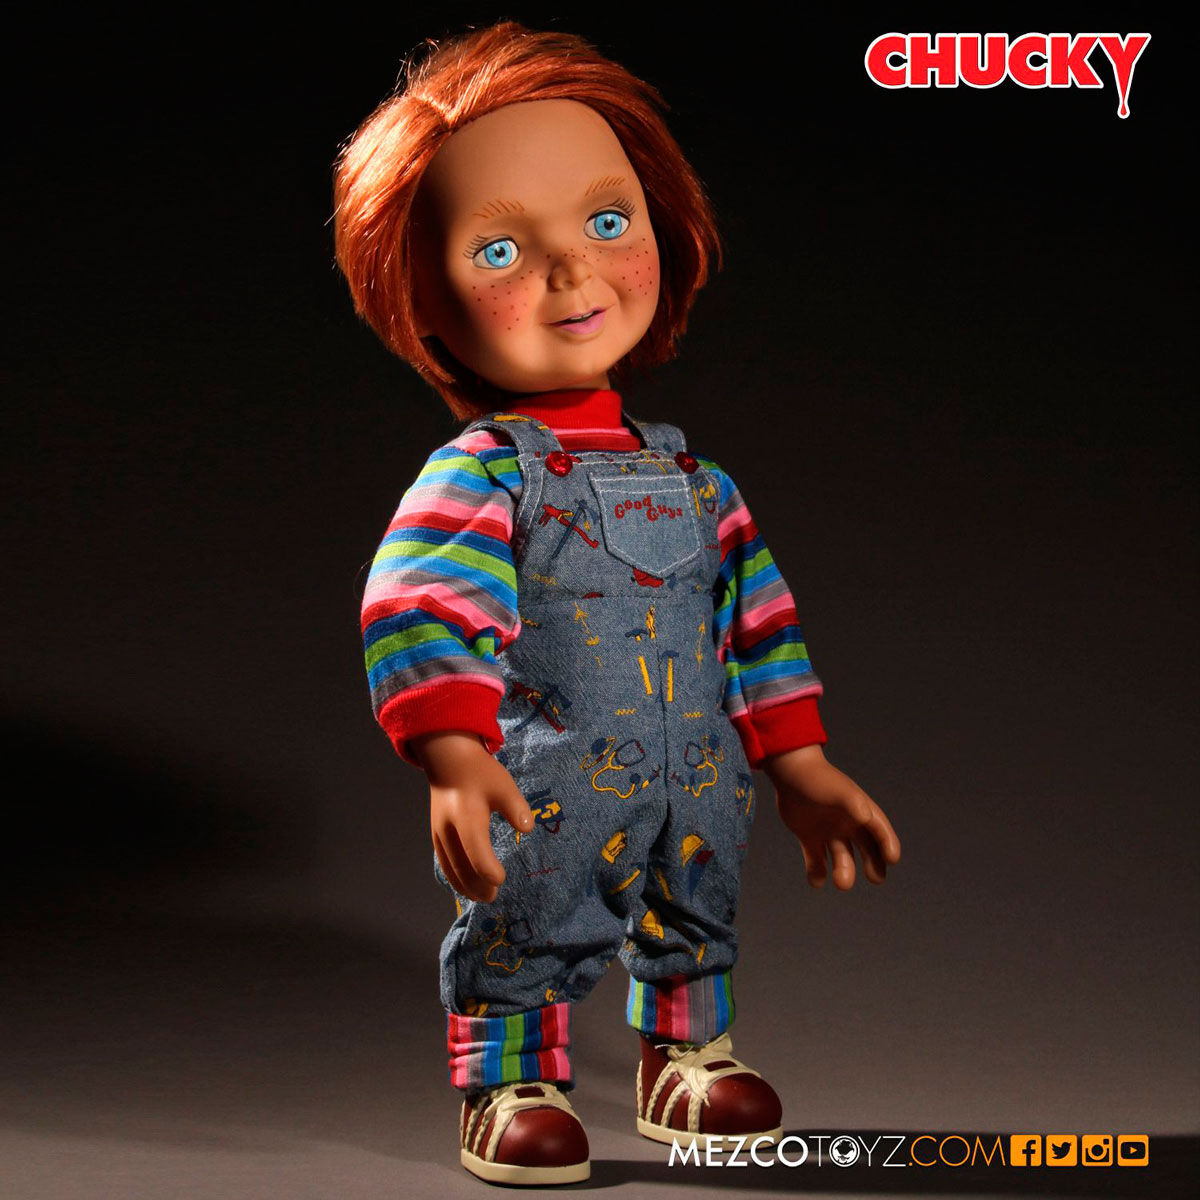 Figura articulada parlante Muñeco Diabolico Chucky 38cm de MEZCO TOYS - Frikibase.com